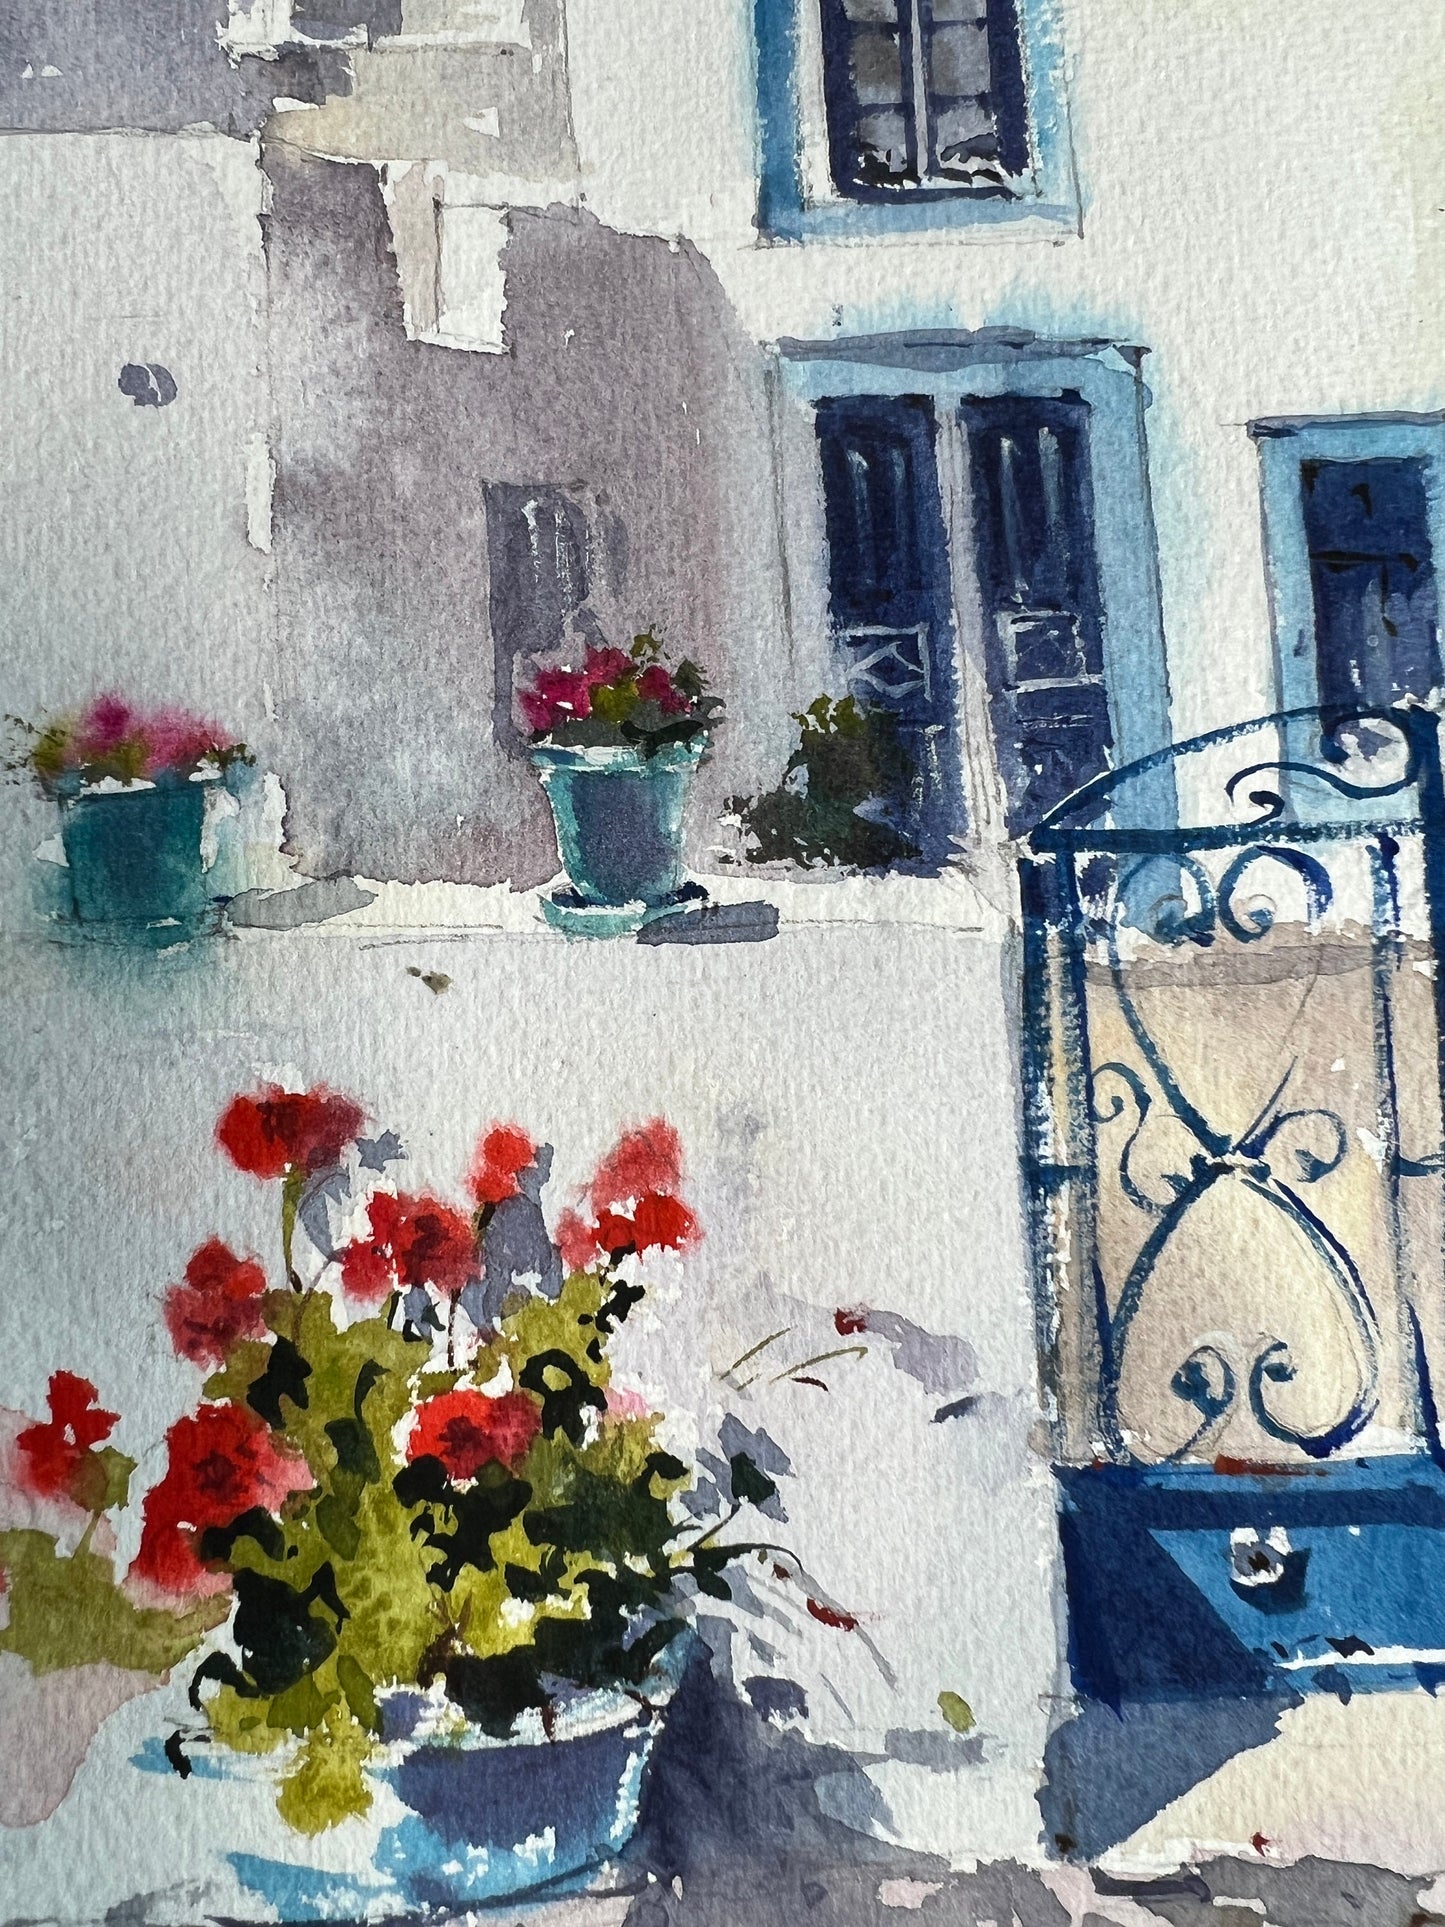 Greek landscape. watercolor painting. Landscape with flowers